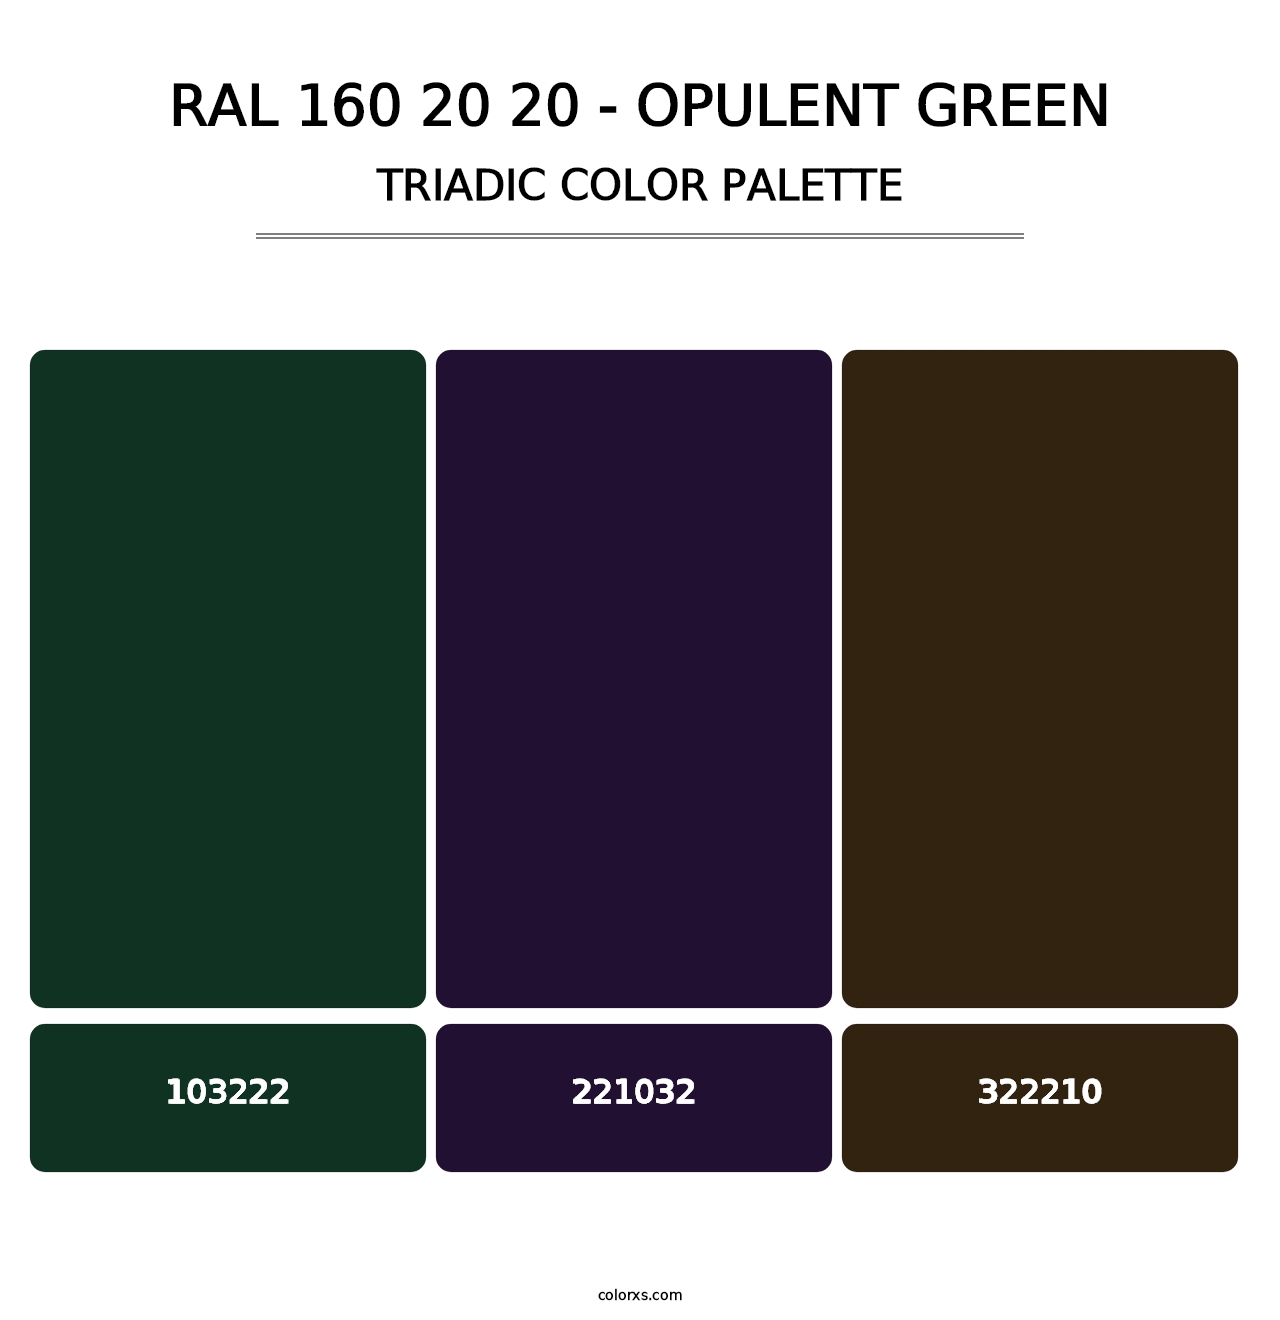 RAL 160 20 20 - Opulent Green - Triadic Color Palette